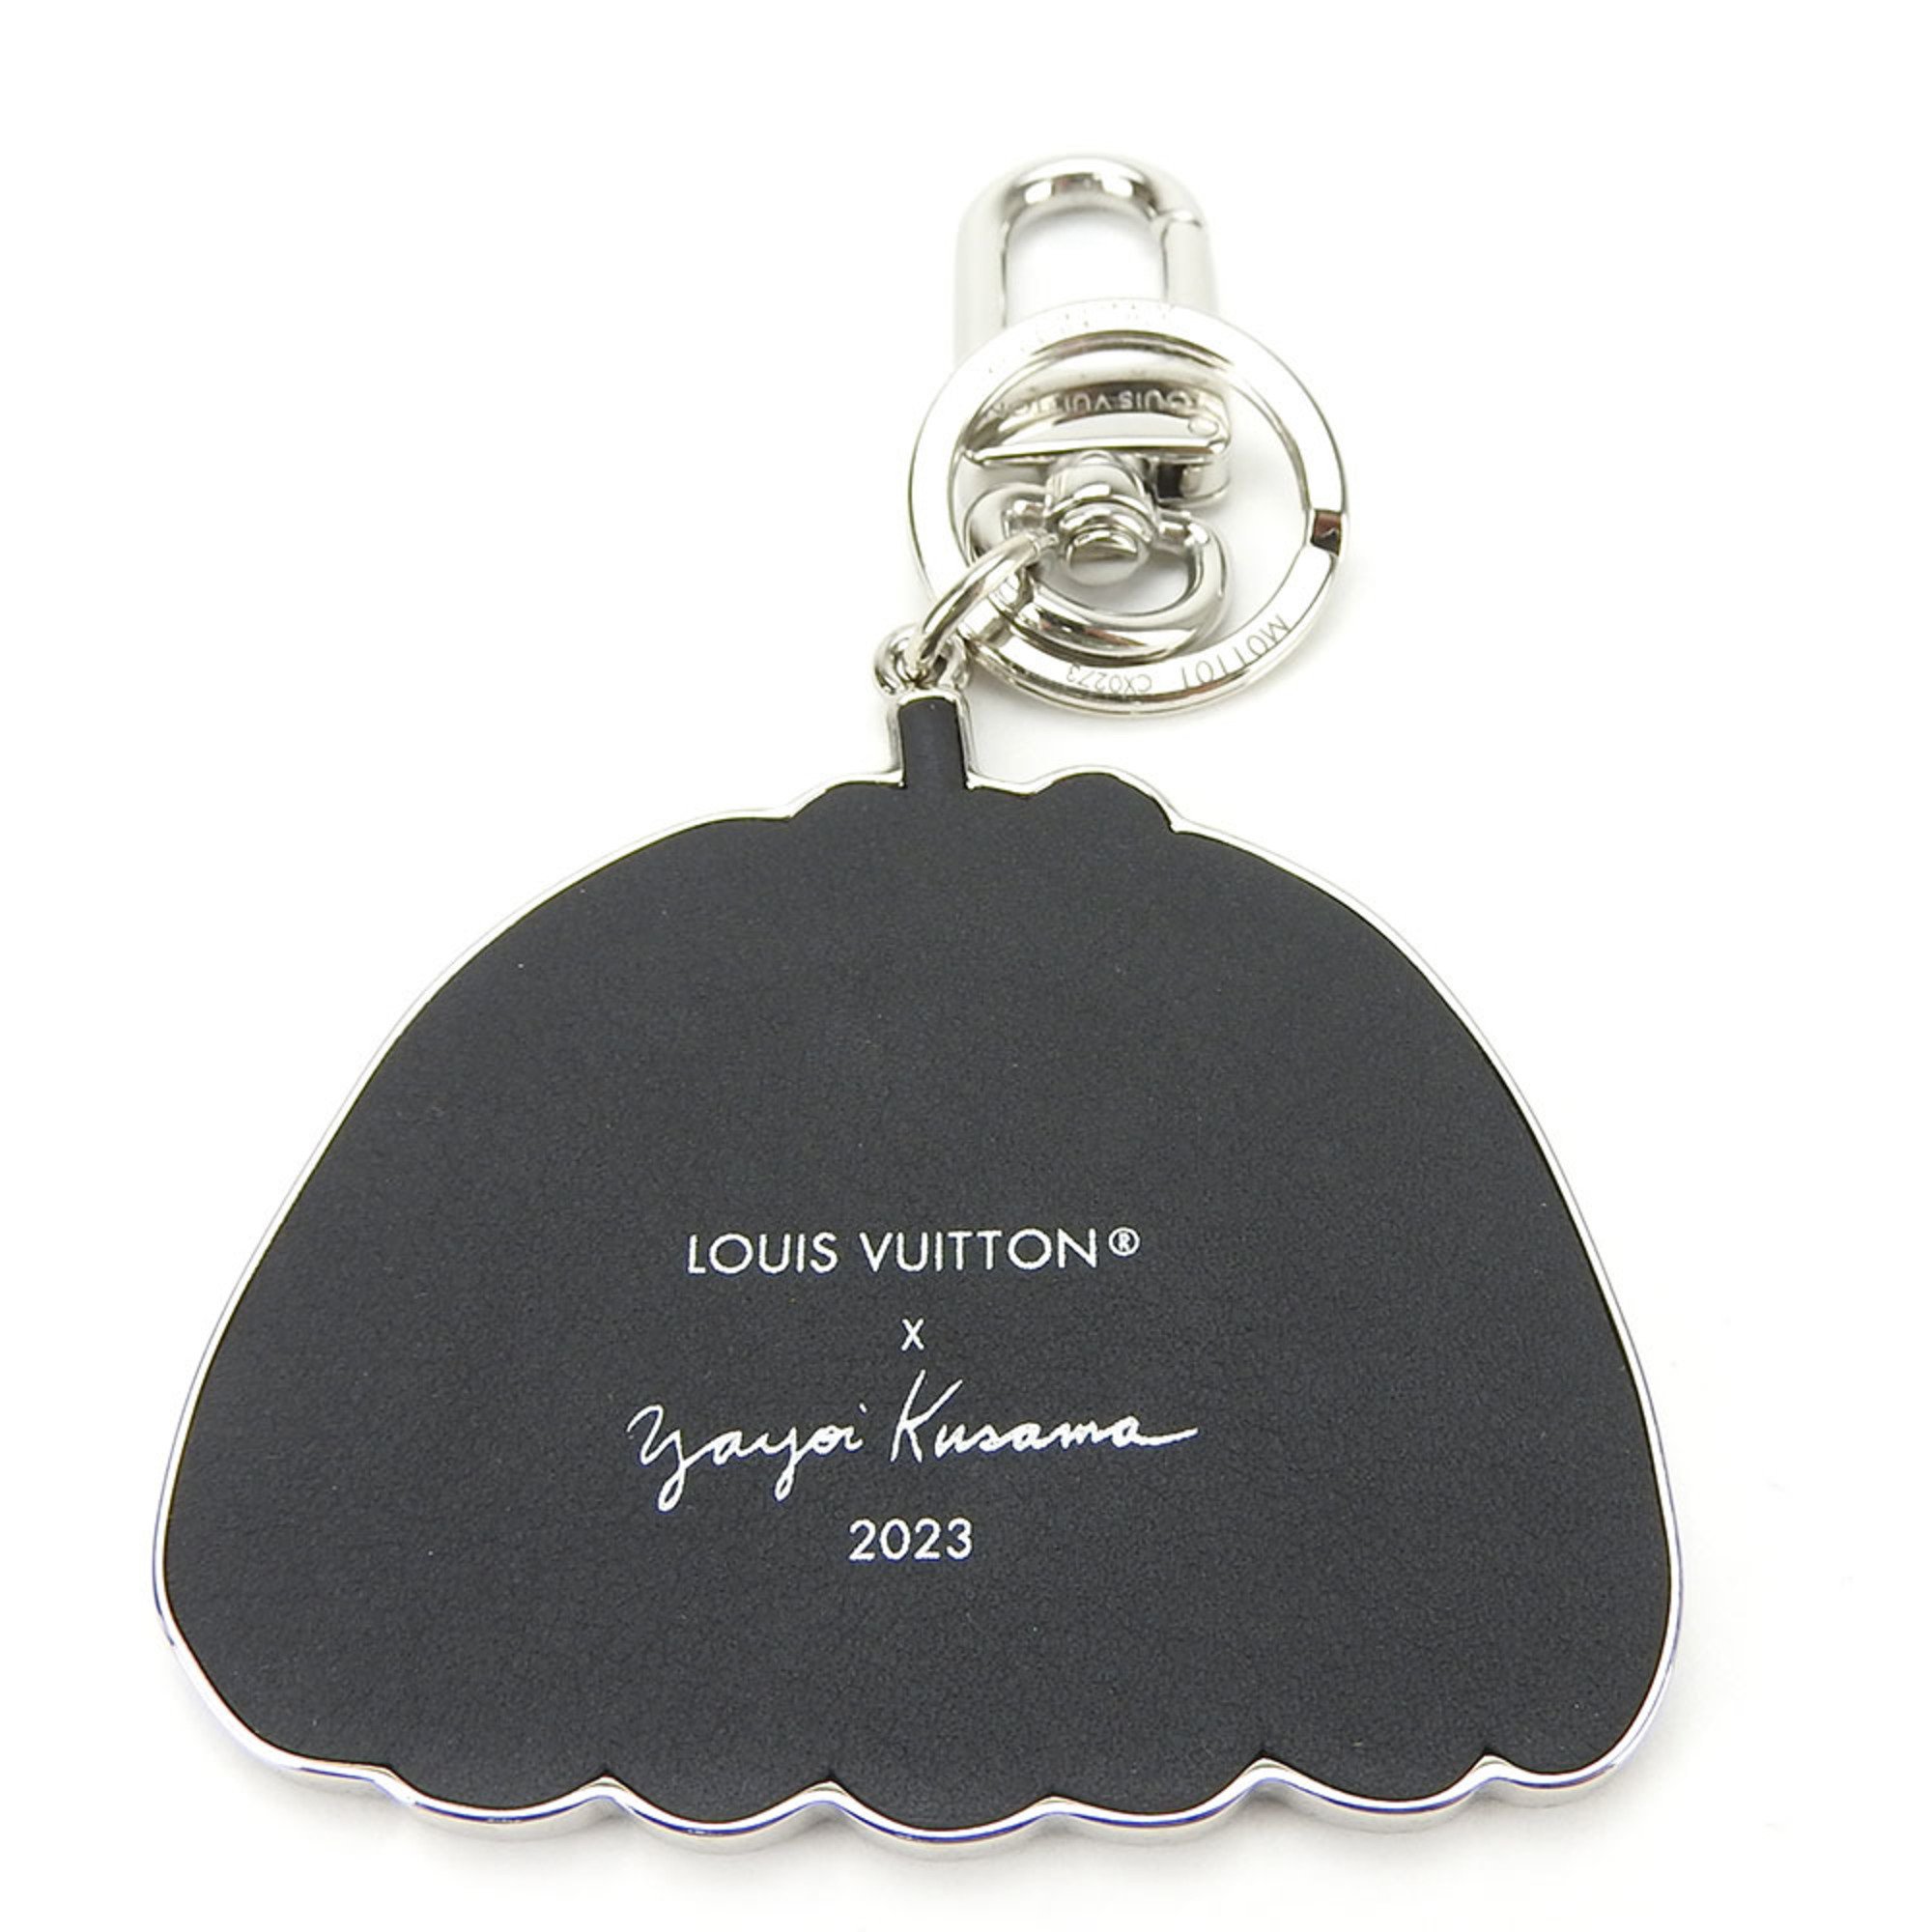 Louis Vuitton Keyring Portocle Pumpkin M01101 yayoi kusama Leather Metal Blue Bag Charm Dots Women's Men's LOUIS VUITTON